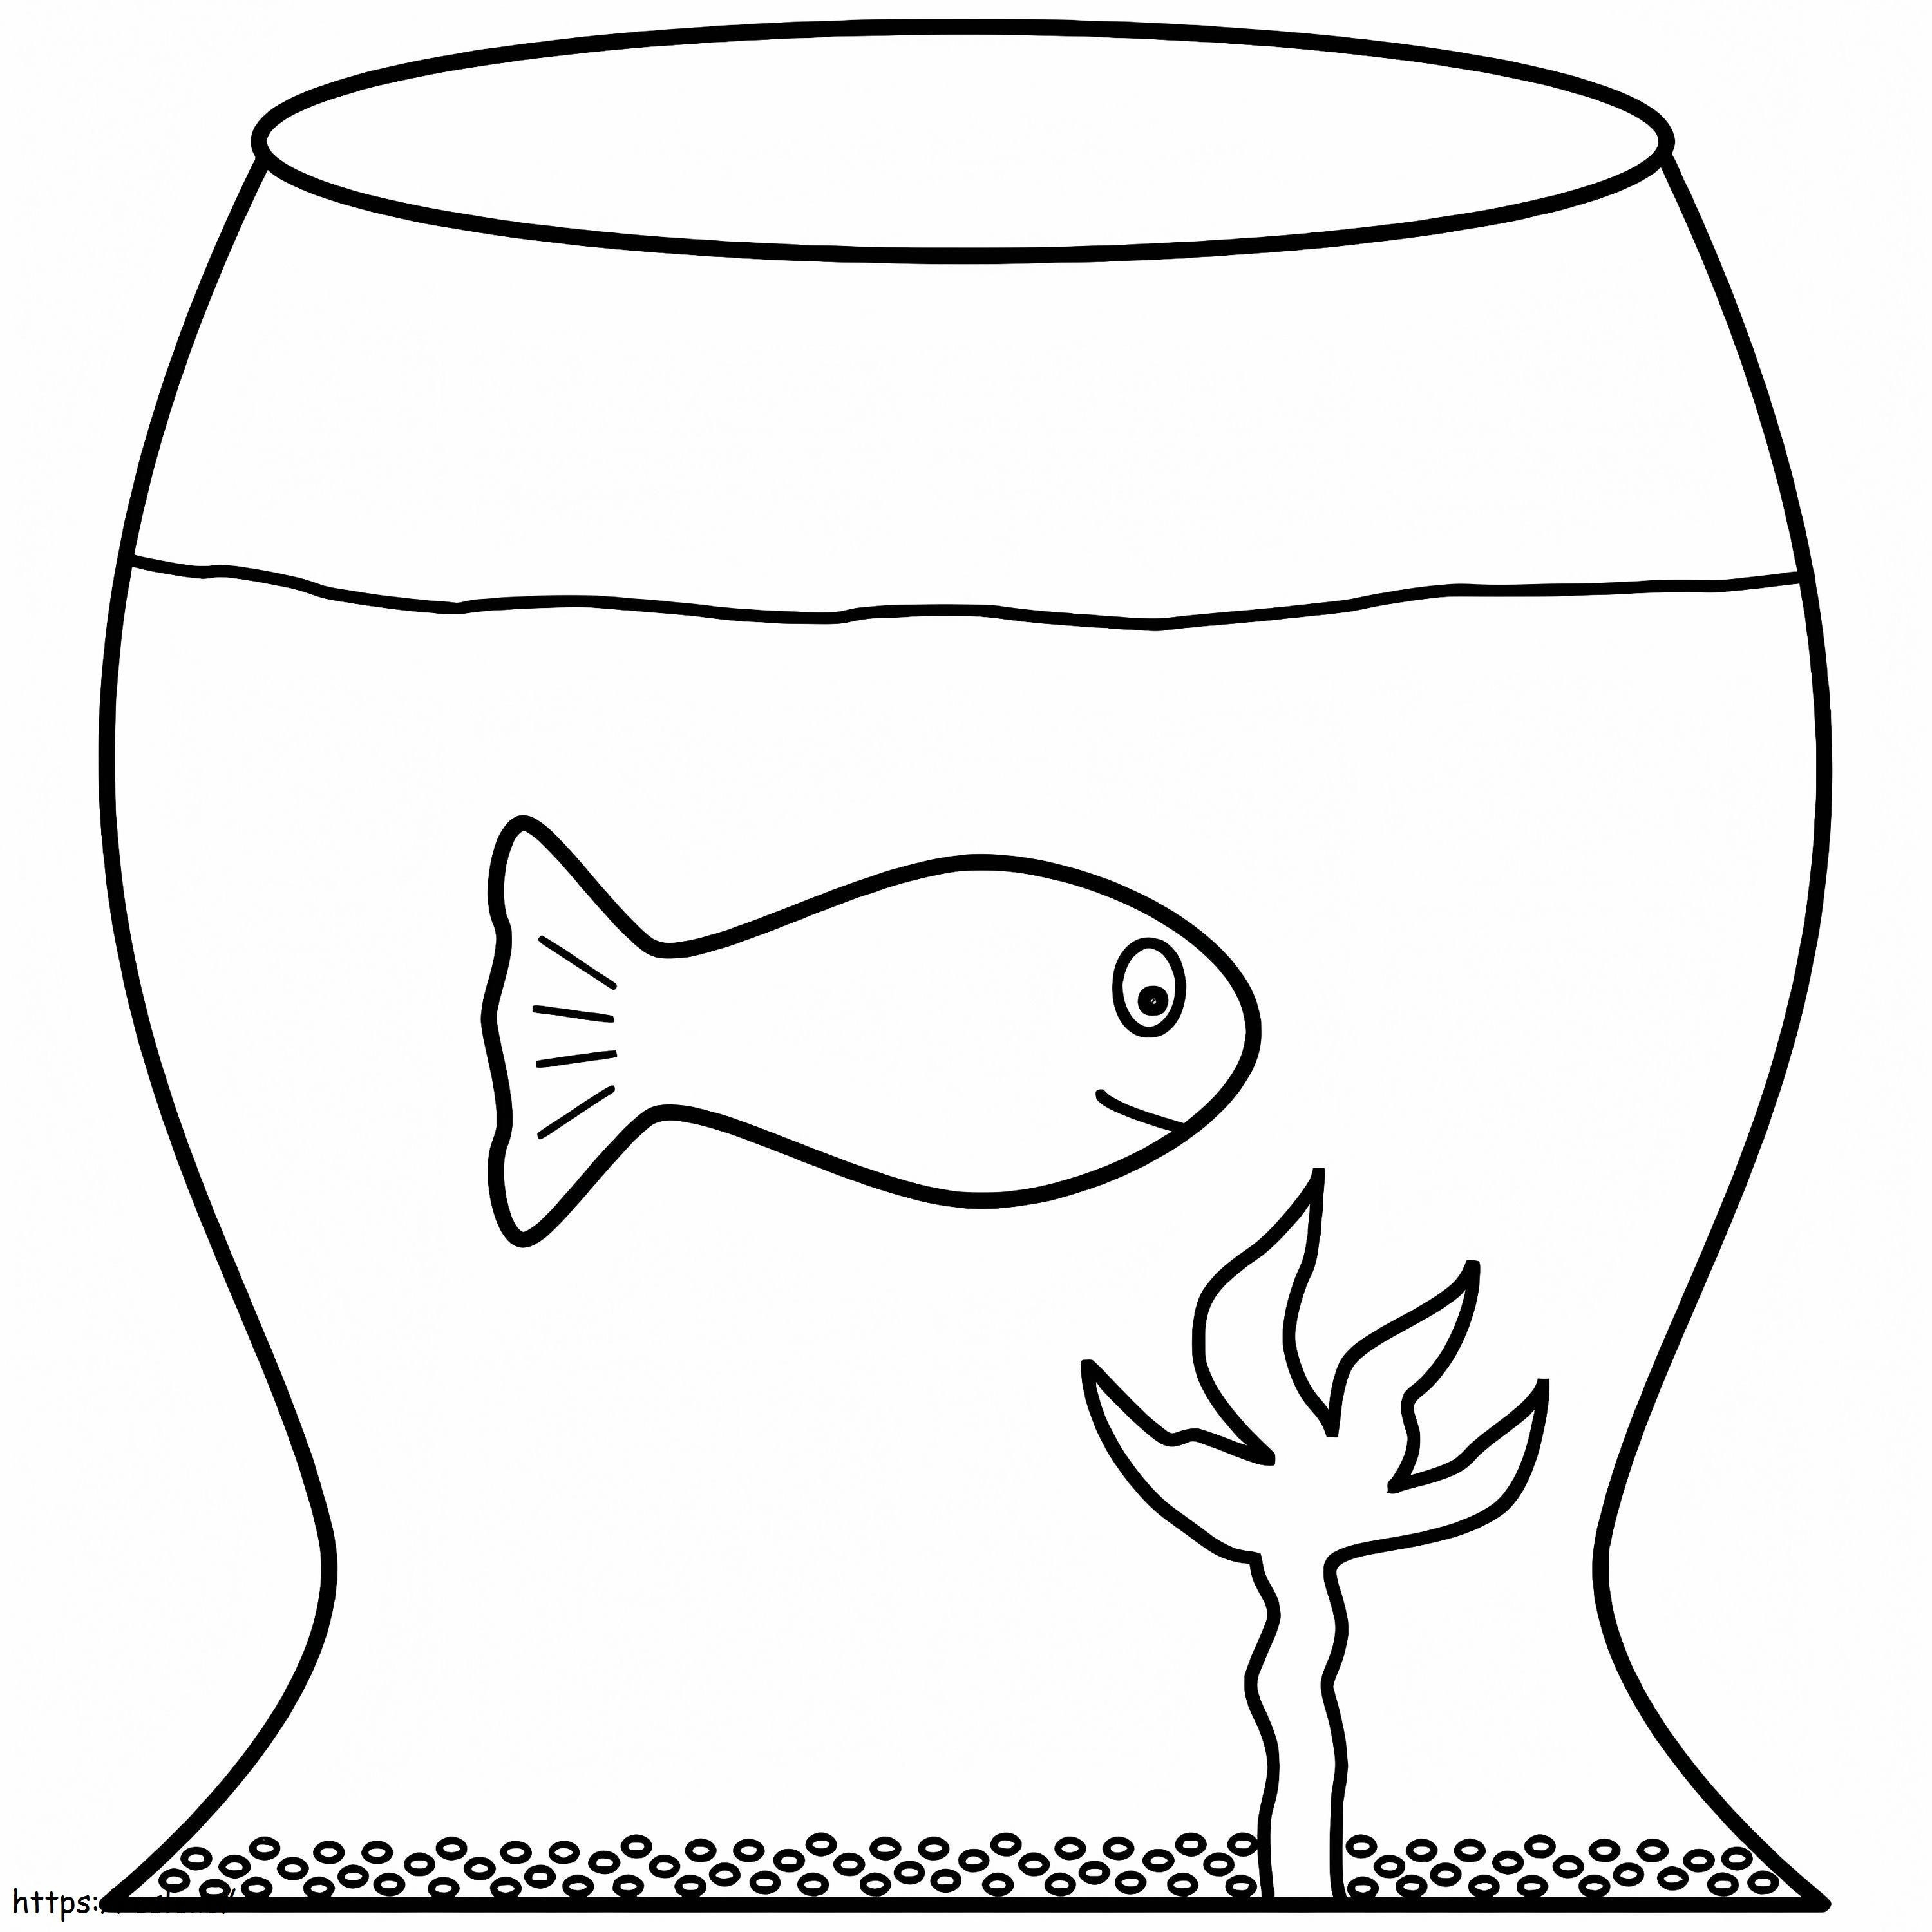 Free Fish Bowl coloring page